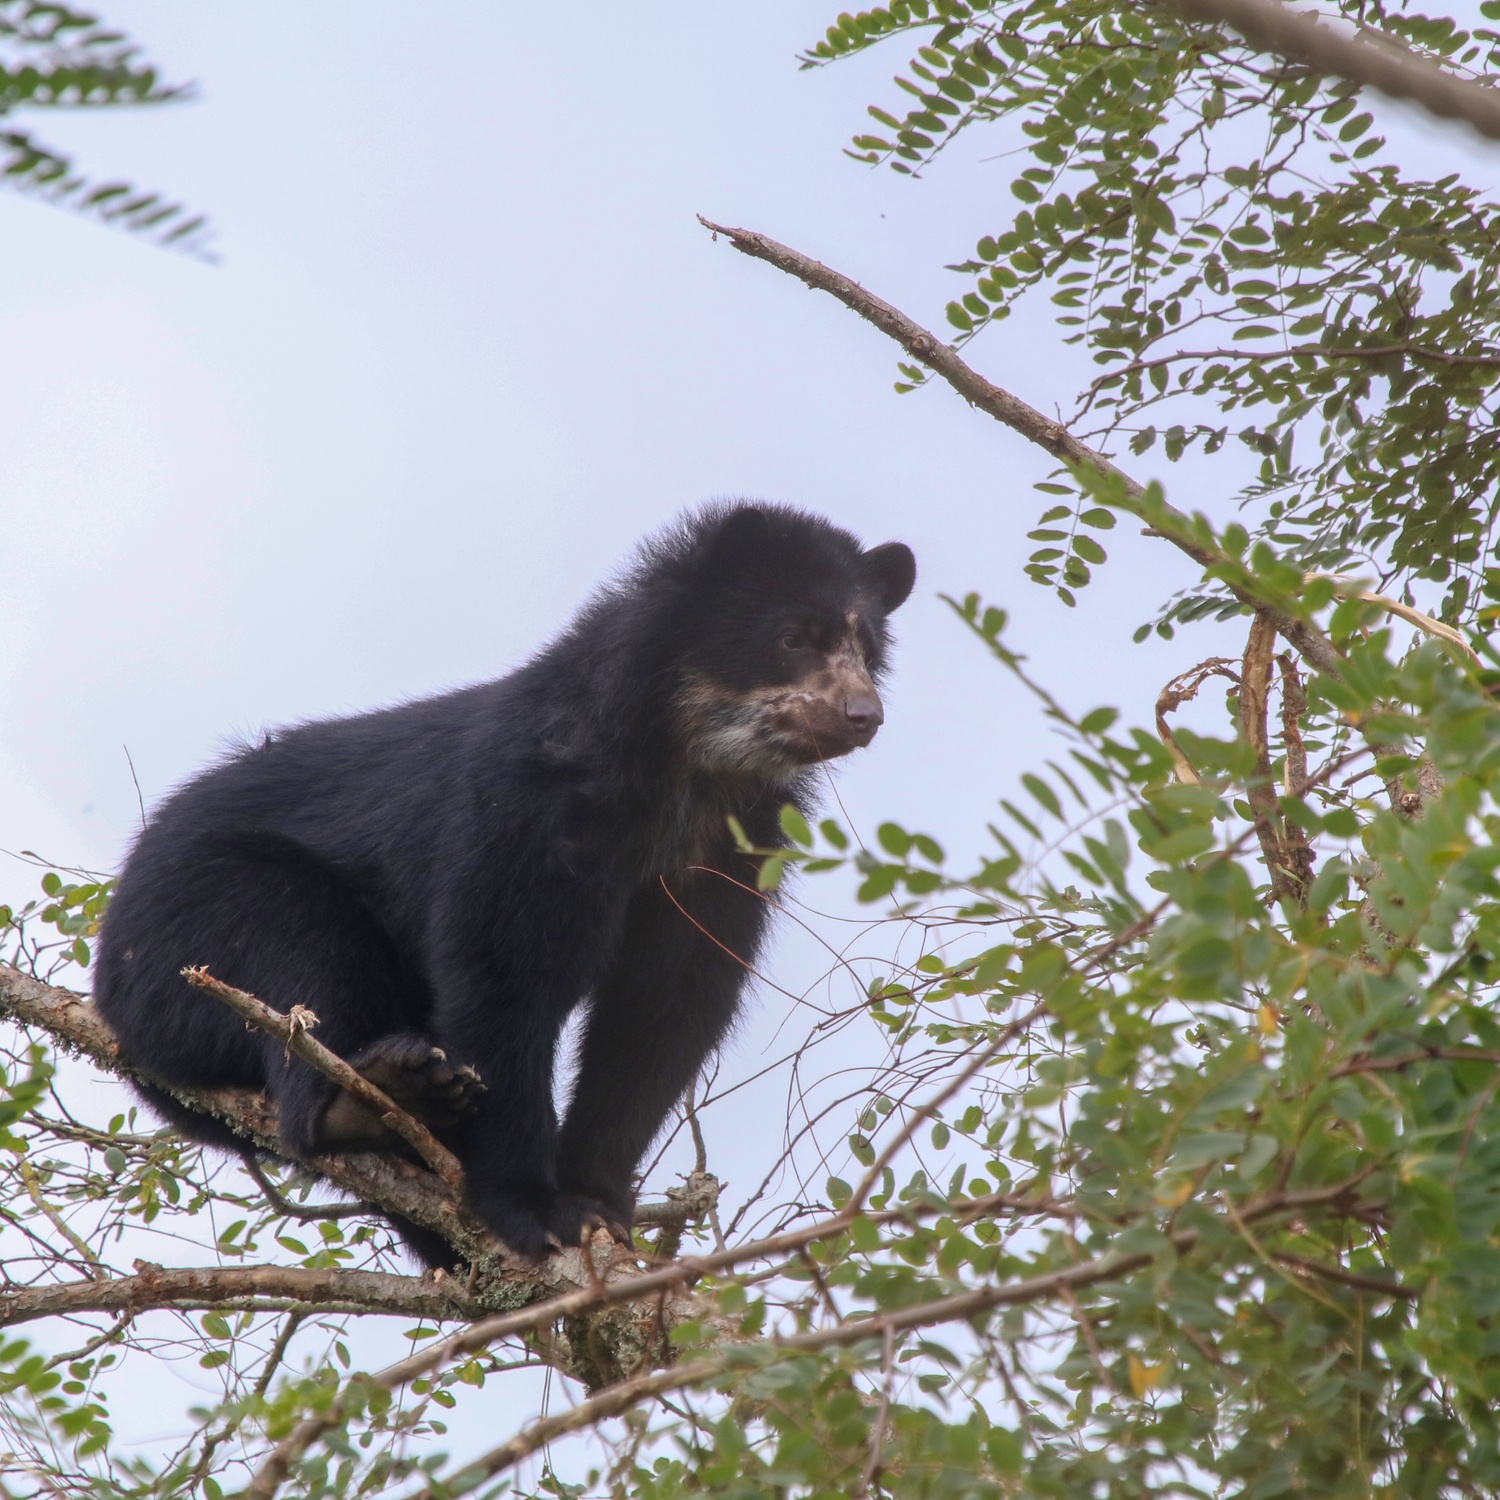 Andean bear cub sitting on a tree branch